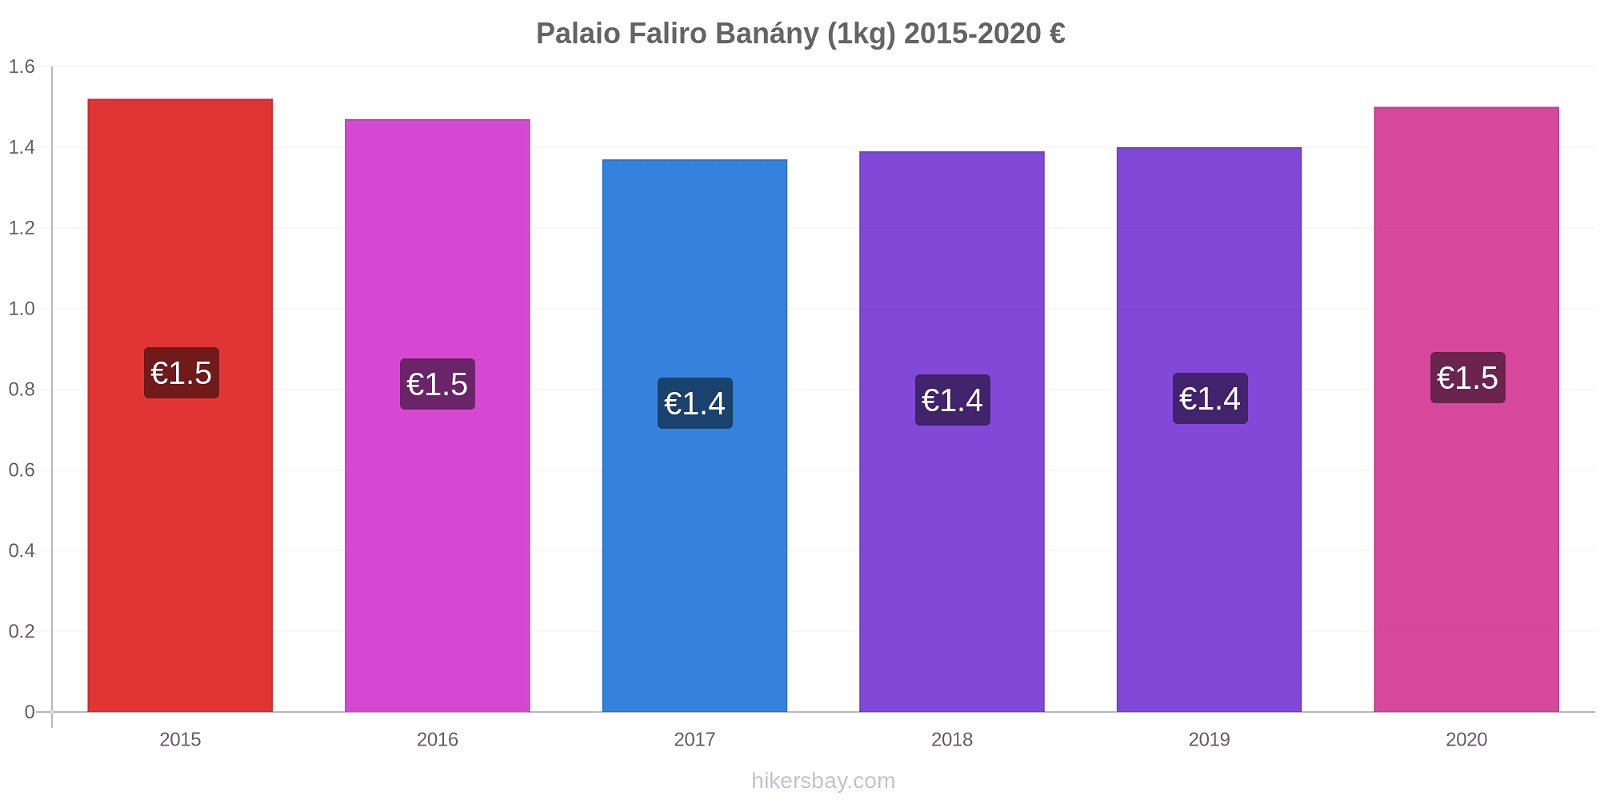 Palaio Faliro změny cen Banány (1kg) hikersbay.com